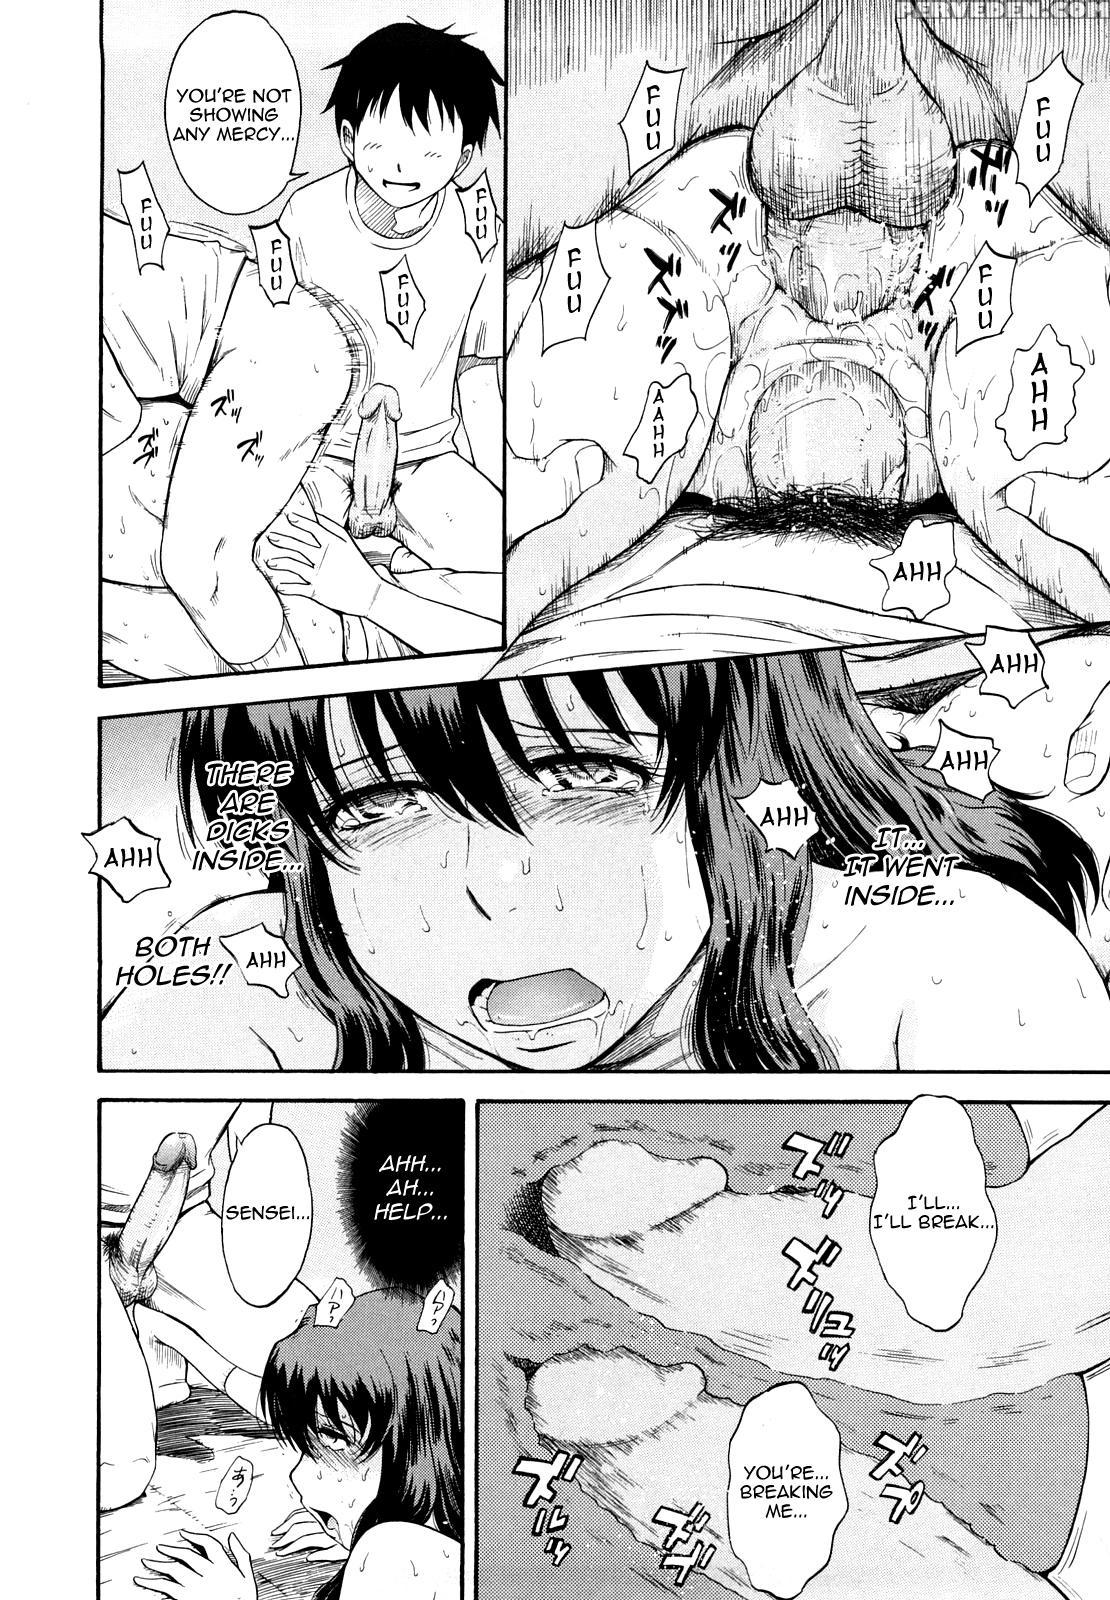 Sex manga with Manga (anime)